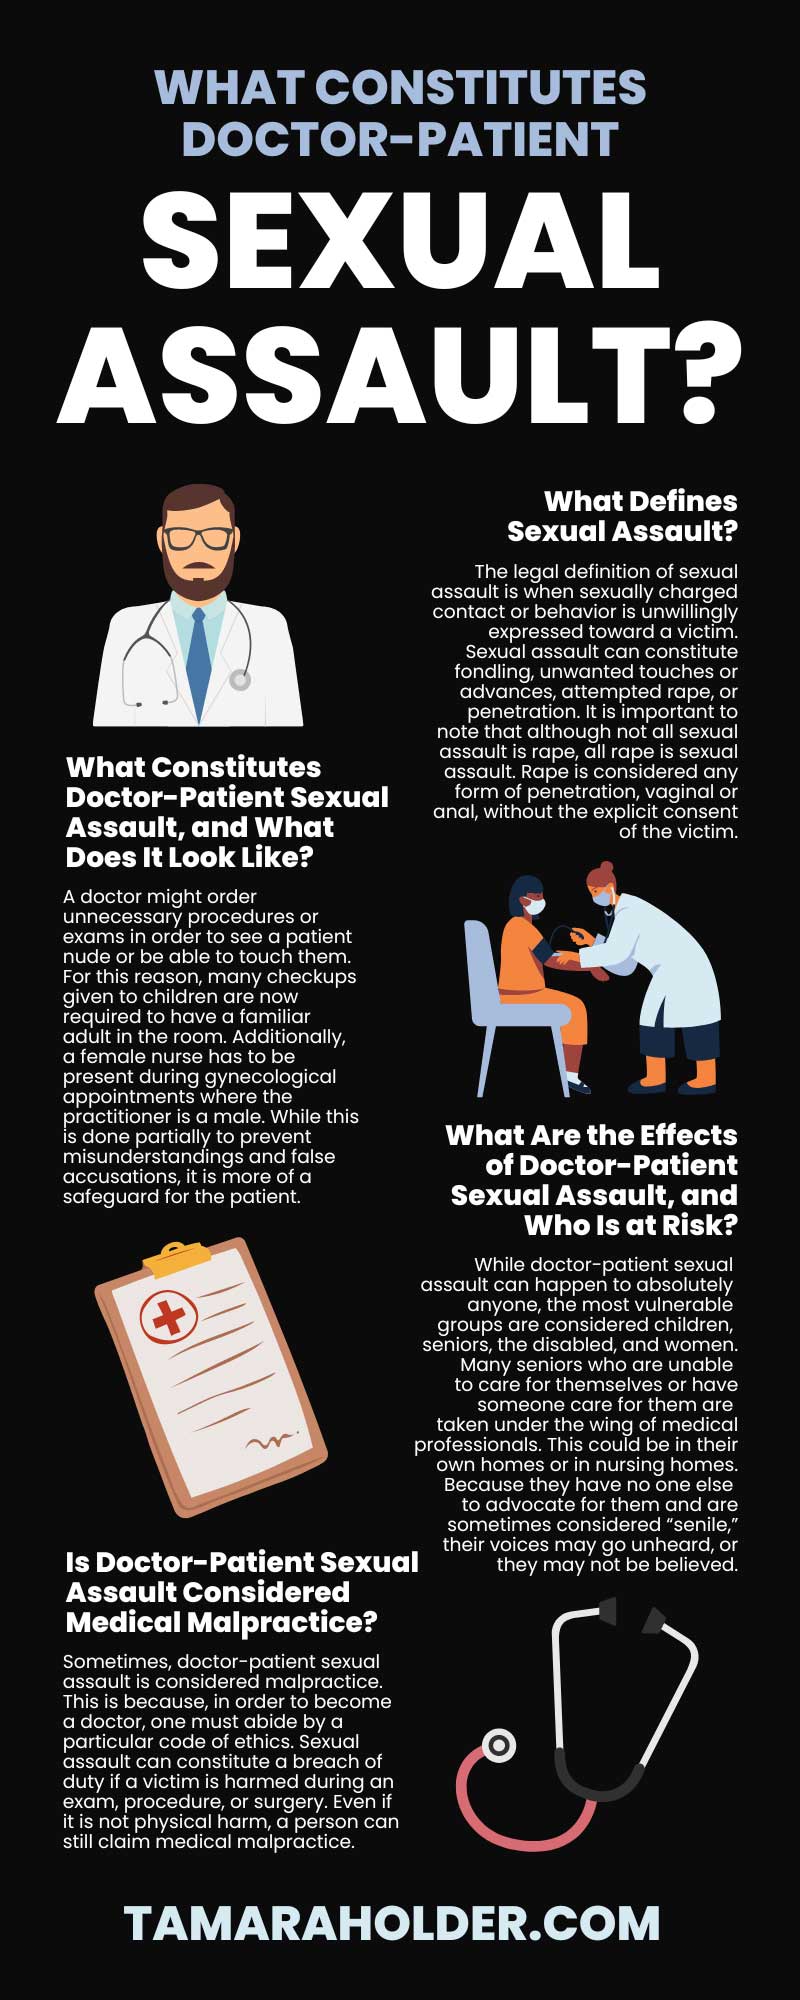 What Constitutes Doctor-Patient Sexual Assault?